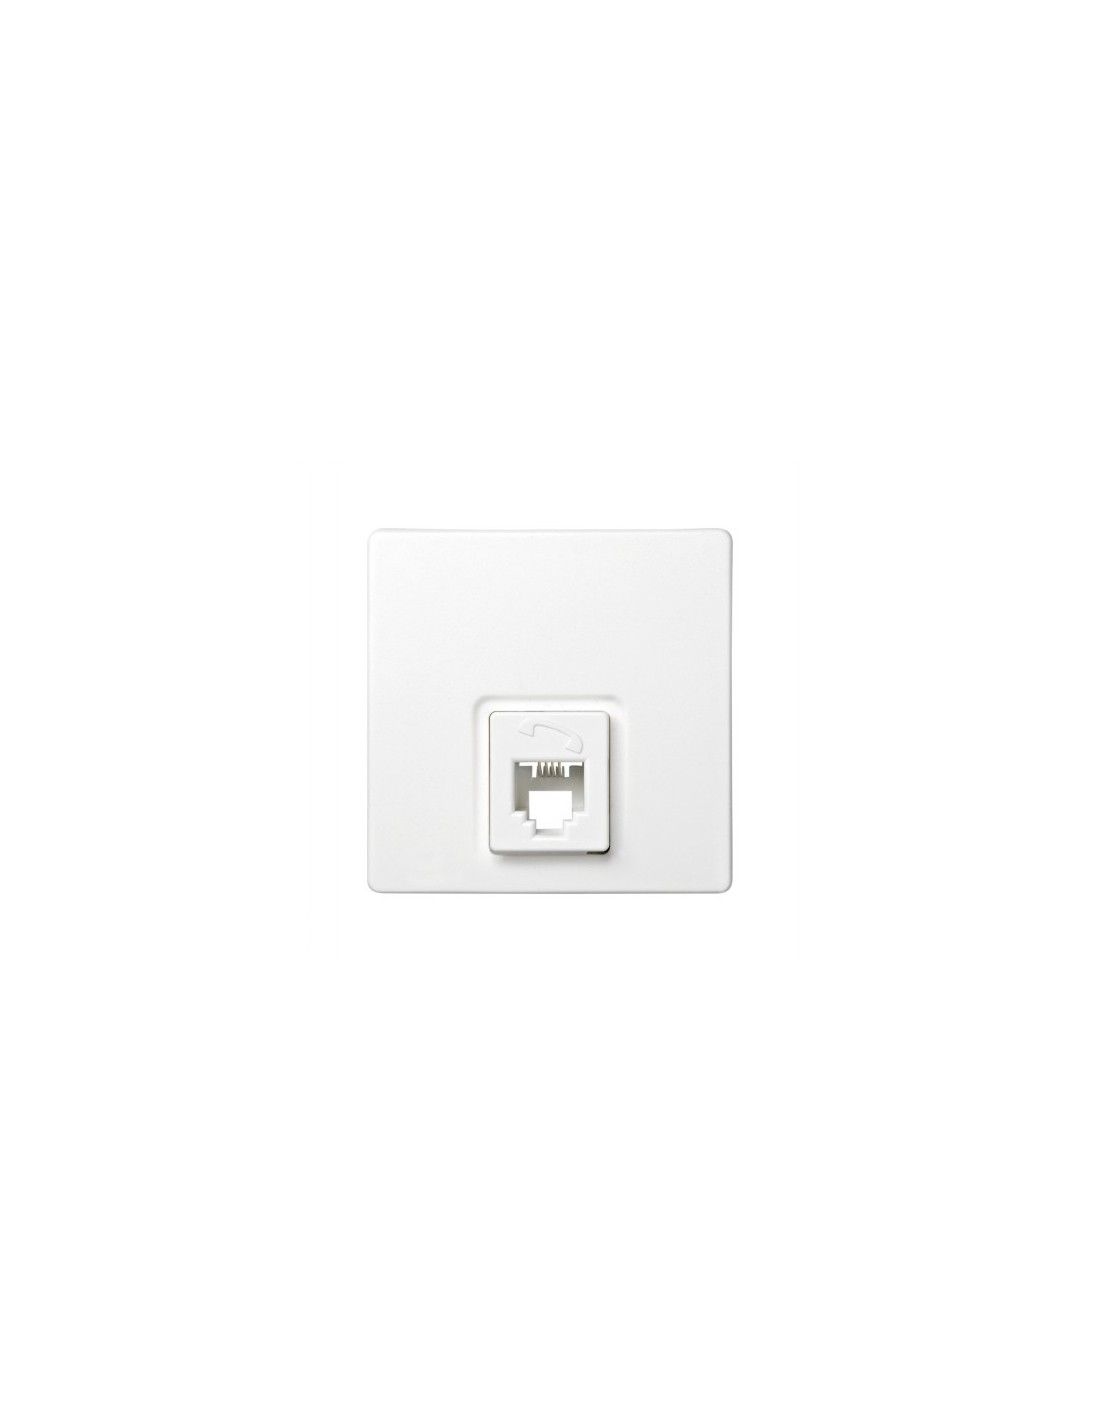 Tecla doble para interruptor-conmutador-cruzamiento blanco Simon73 Loft  73026-60